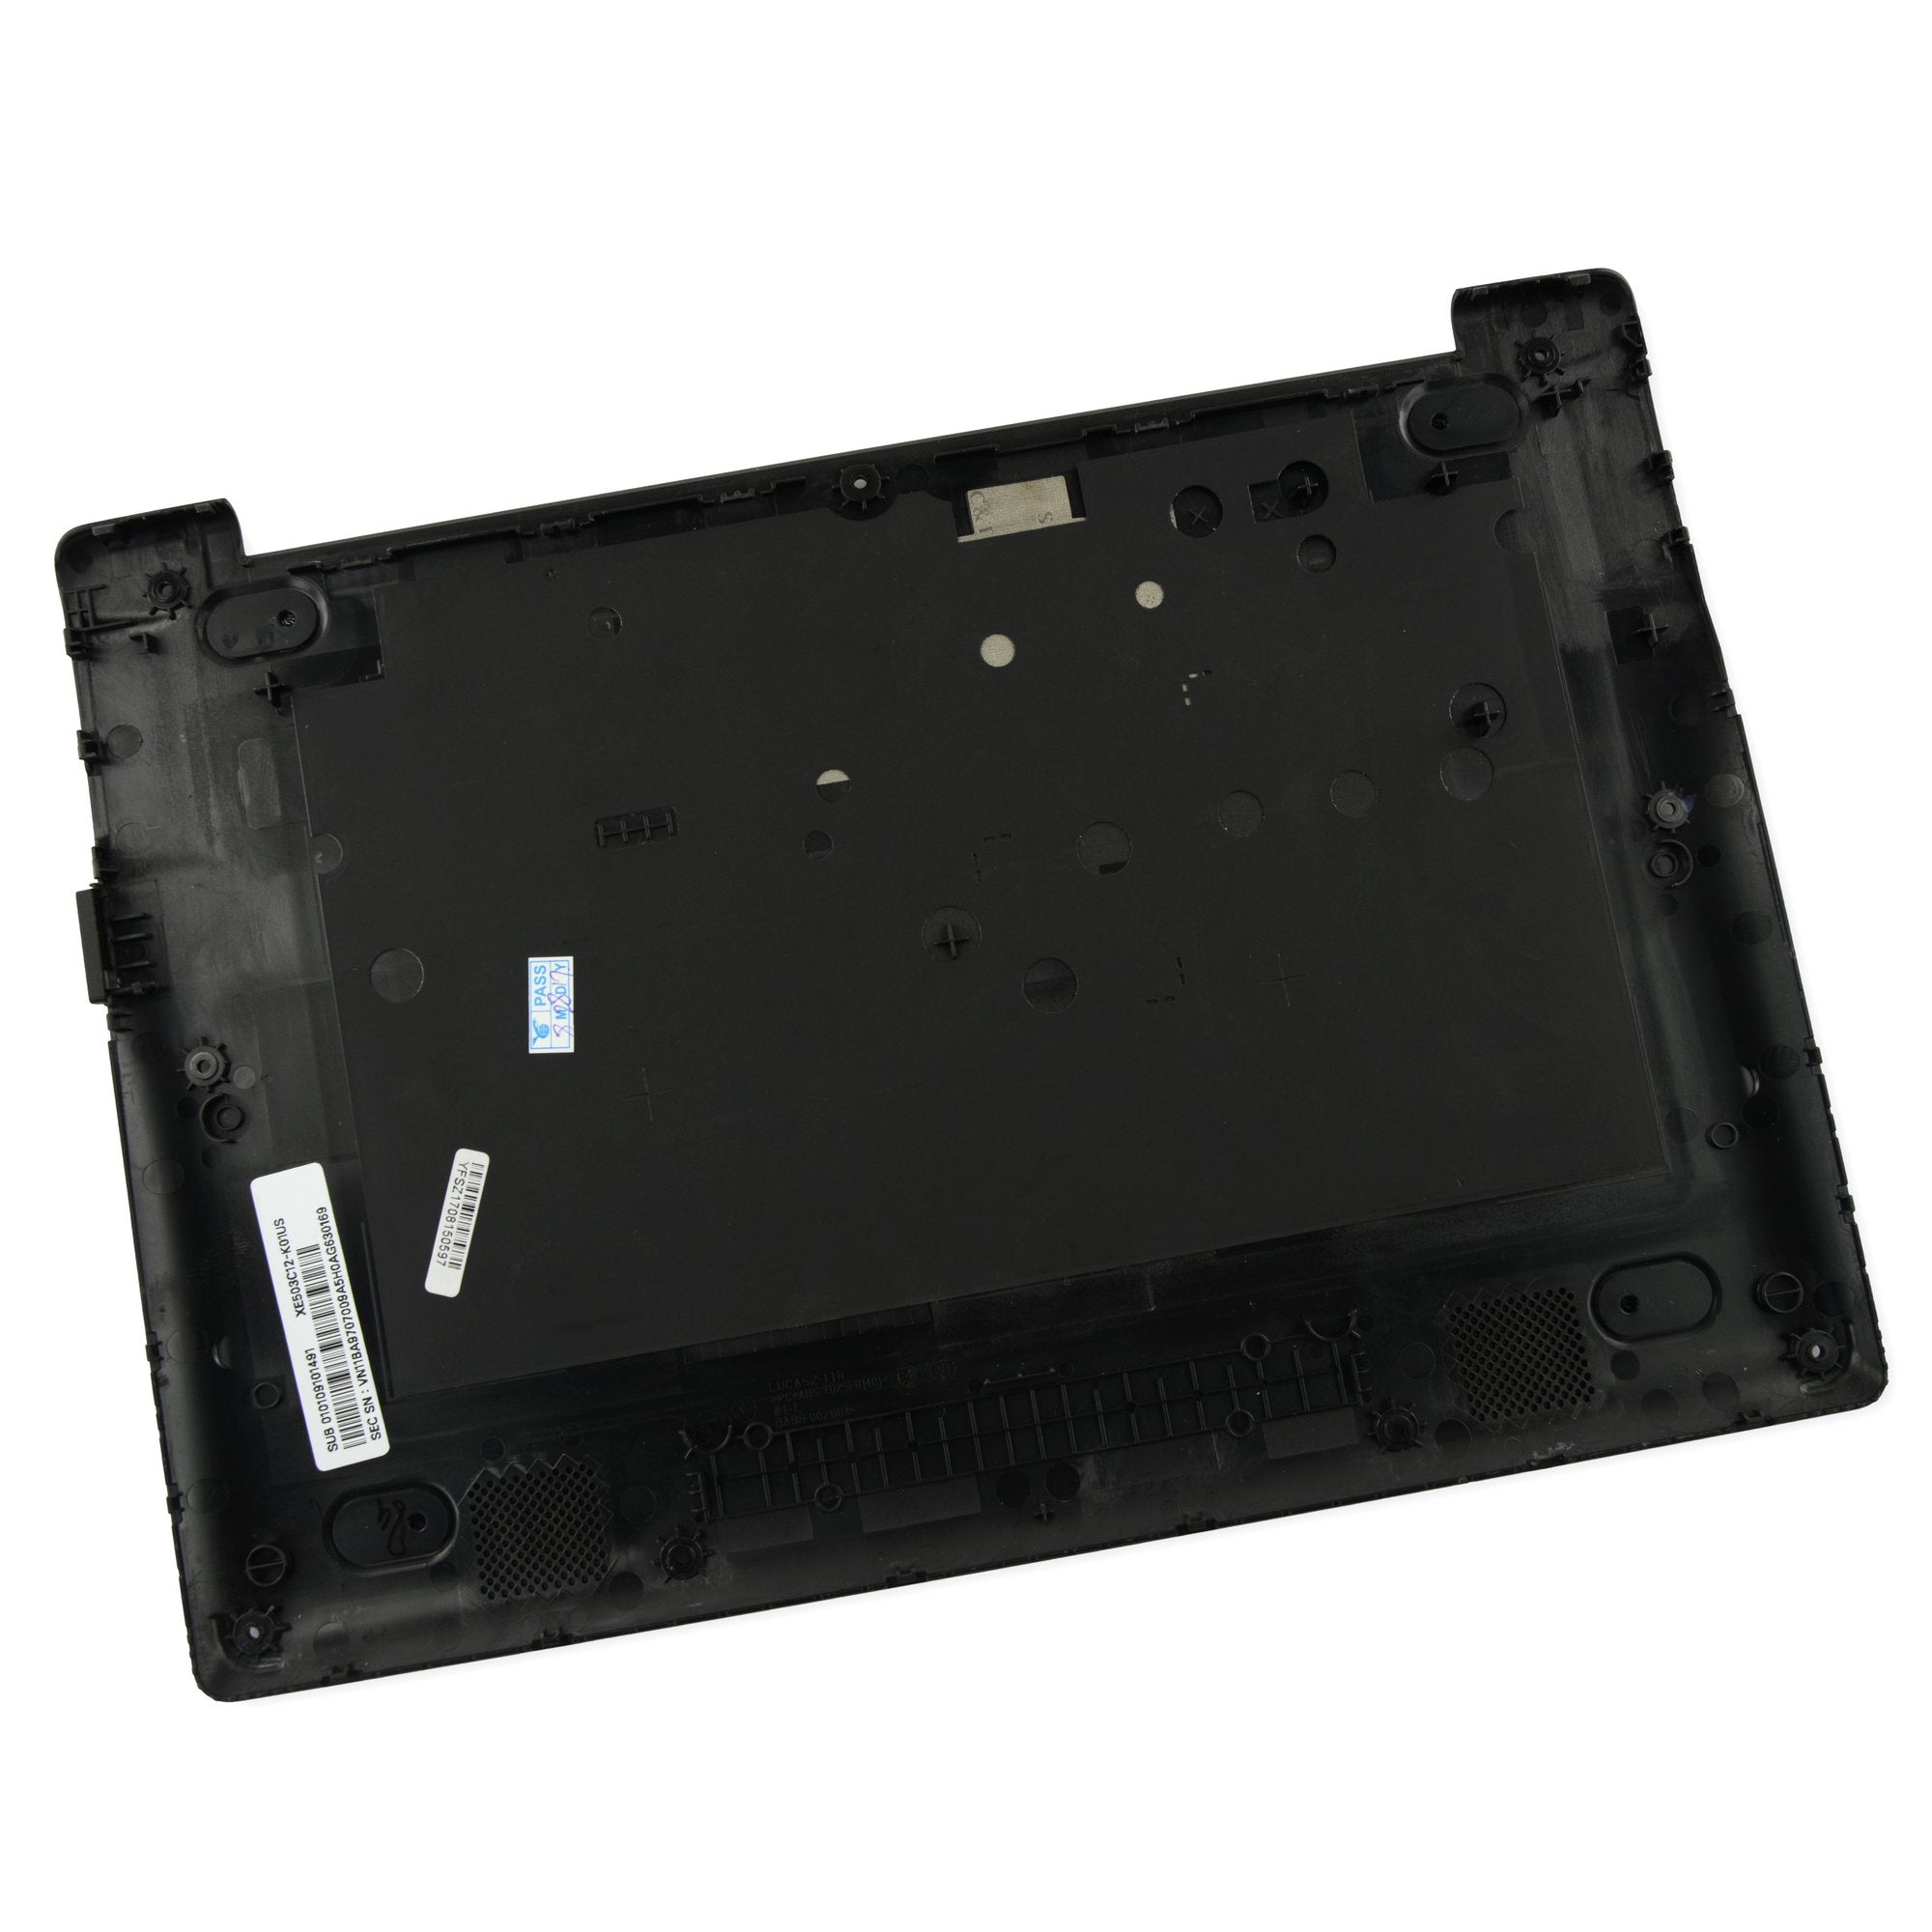 Samsung Chromebook XE503C12 Bottom Cover Black Used, A-Stock